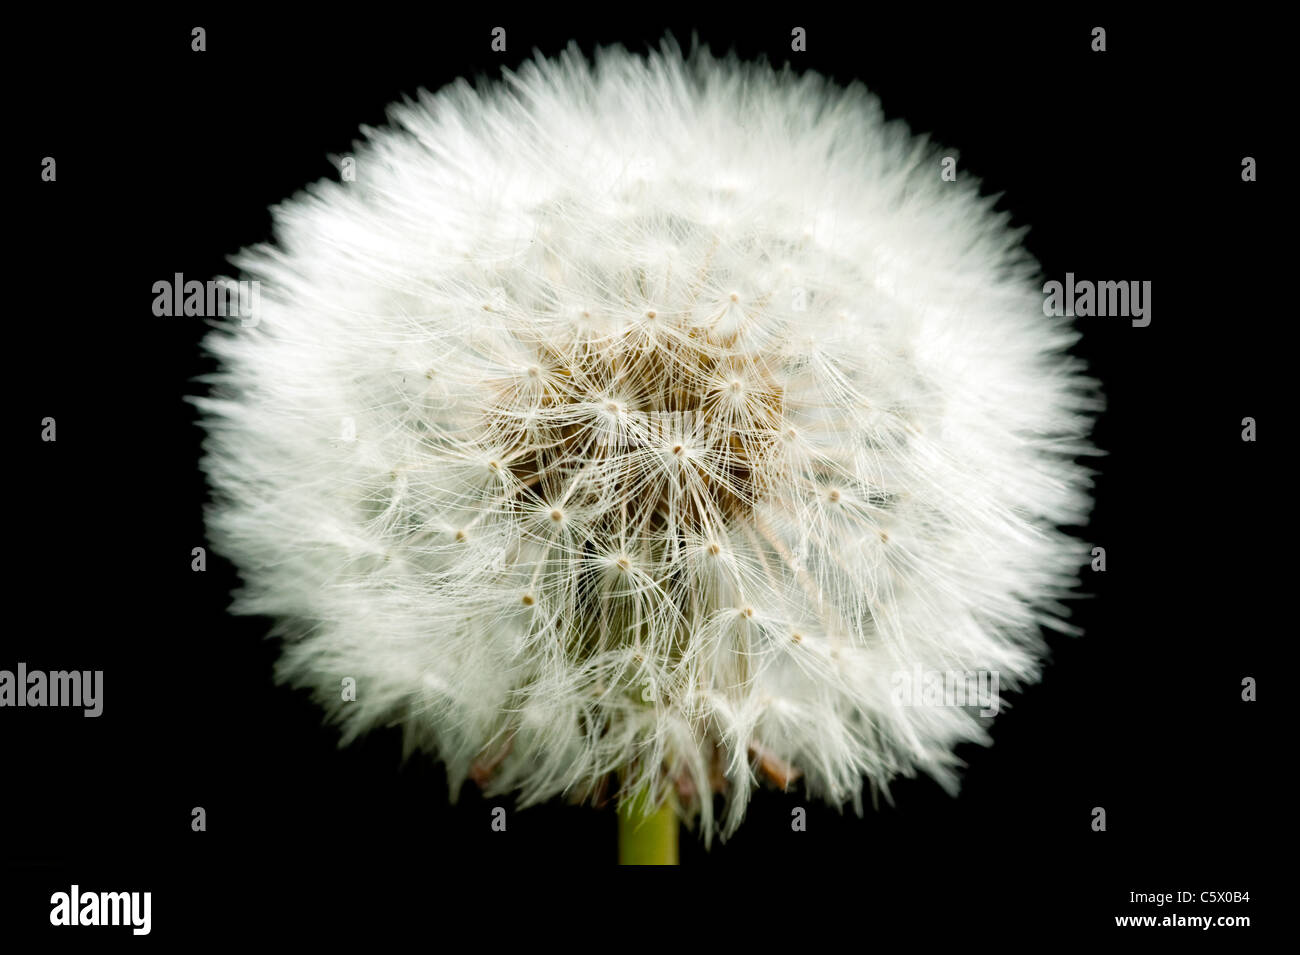 Dandelion seed head closeup against black background Stock Photo